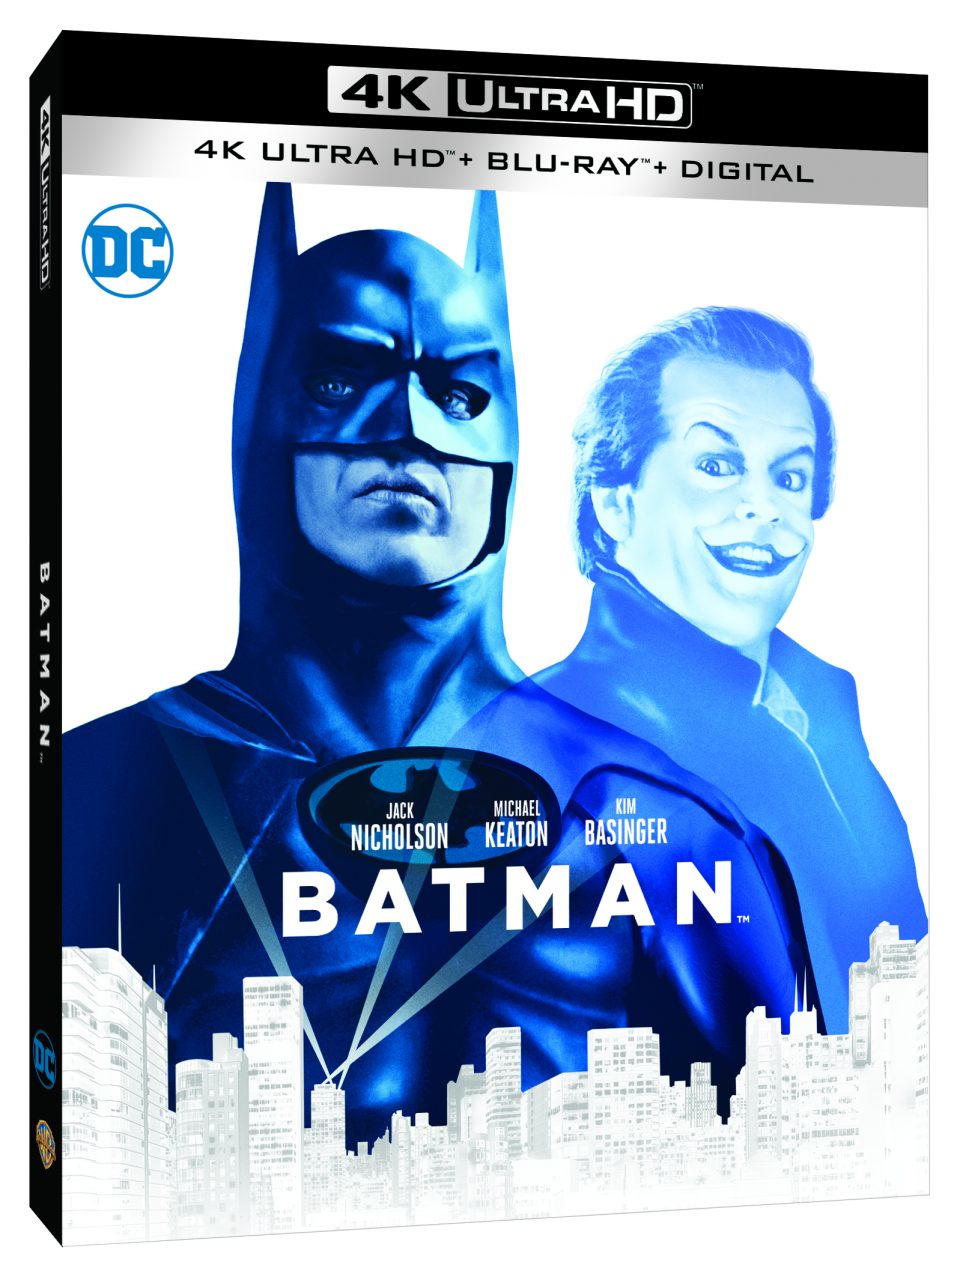 Batman 4K Ultra HD cover (Warner Bros. Home Entertainment)